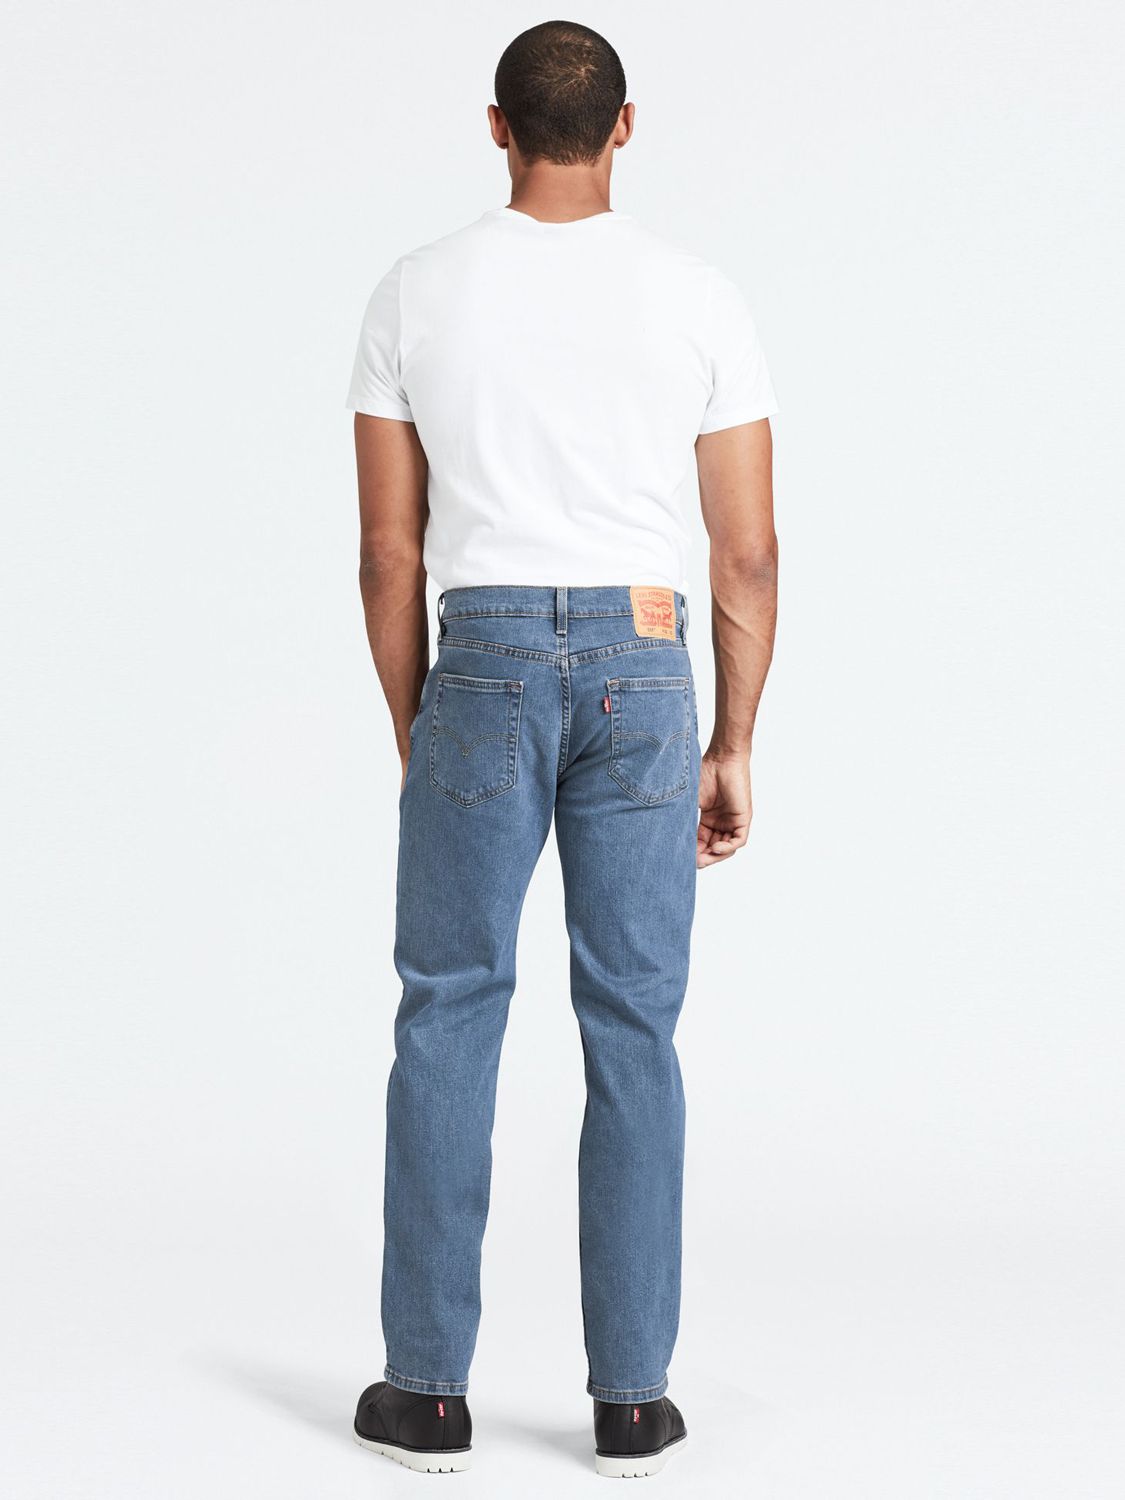 Levi's 514 Straight Cut Jeans, Stonewash Stretch, 30S